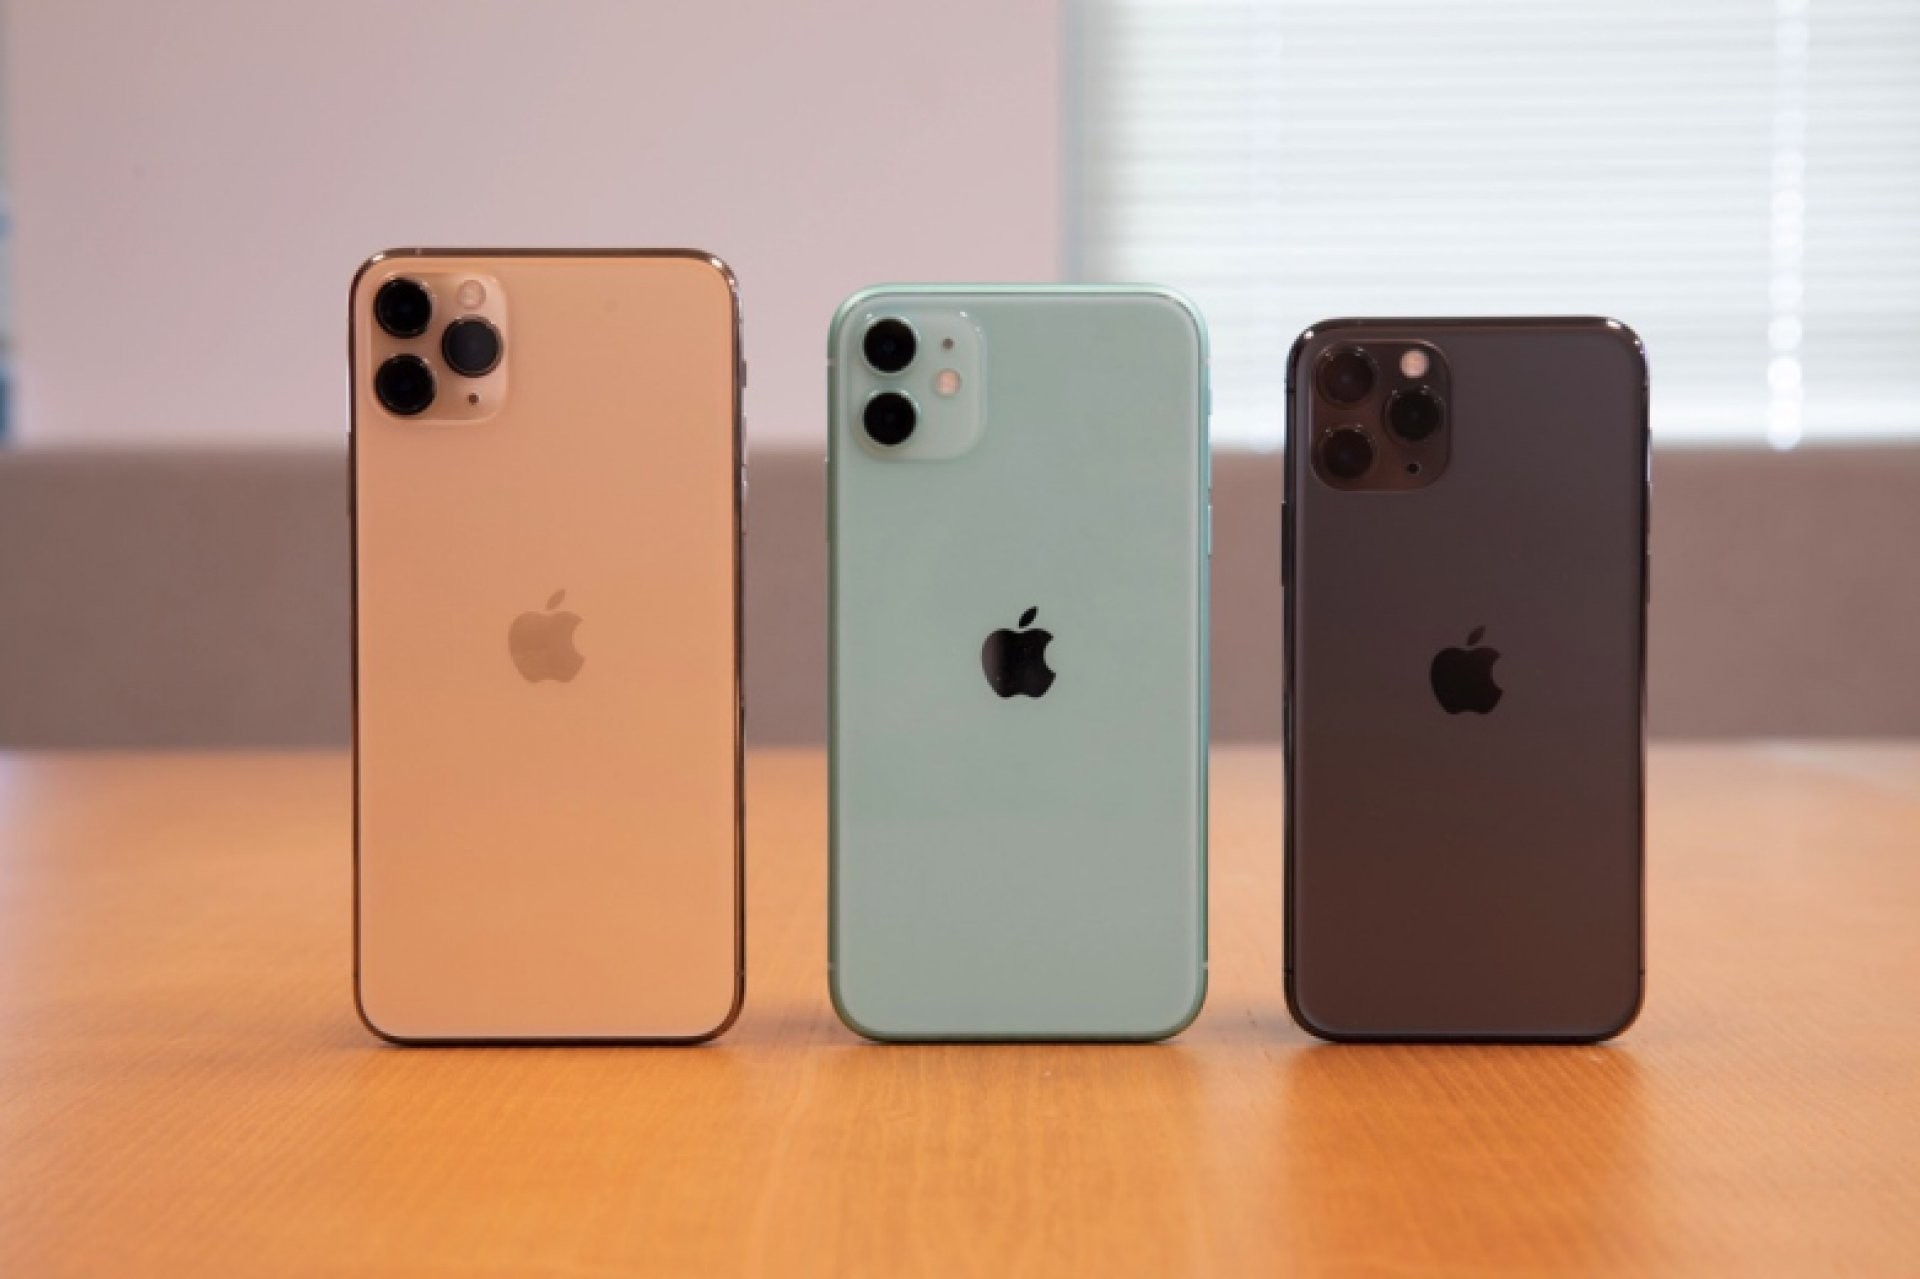 Айфон 11 похож на. Iphone 11 Pro Max. Apple iphone 11 Pro. Эпл айфон 11 Промакс. Iphone 11 Pro расцветки.